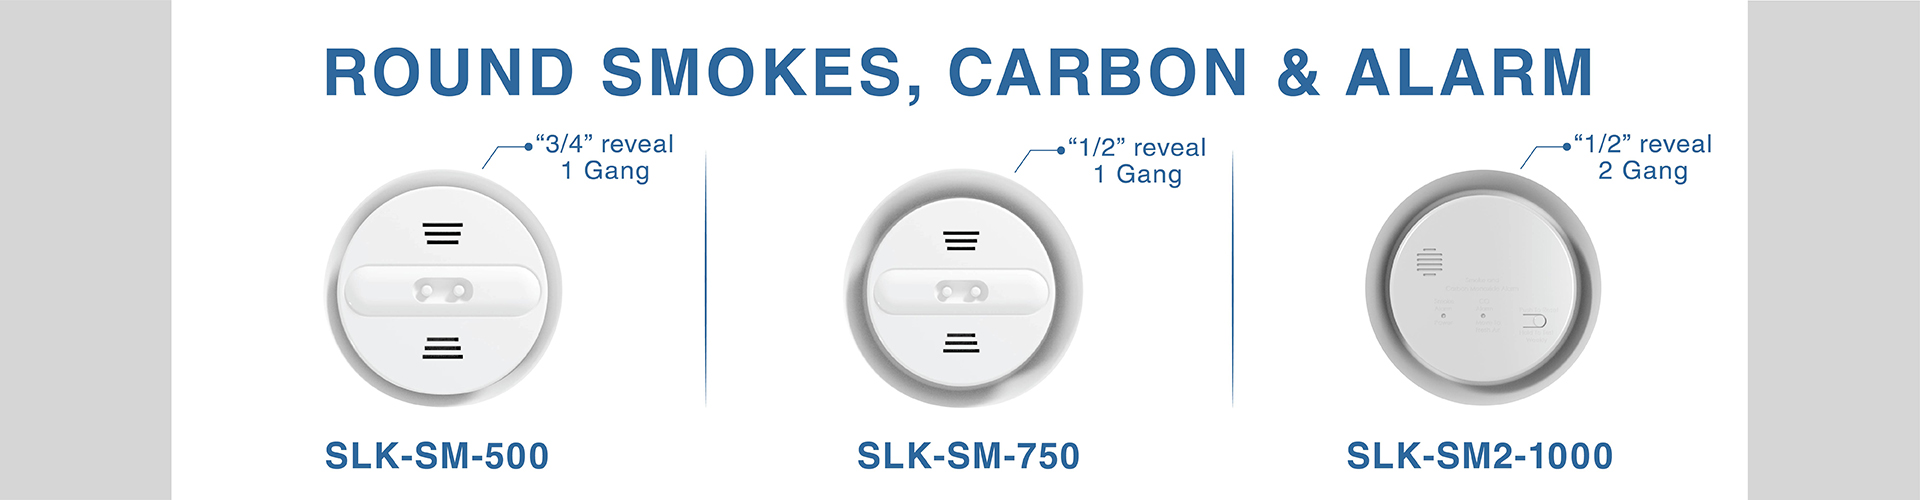 Round Smokes, Carbon & Alarm